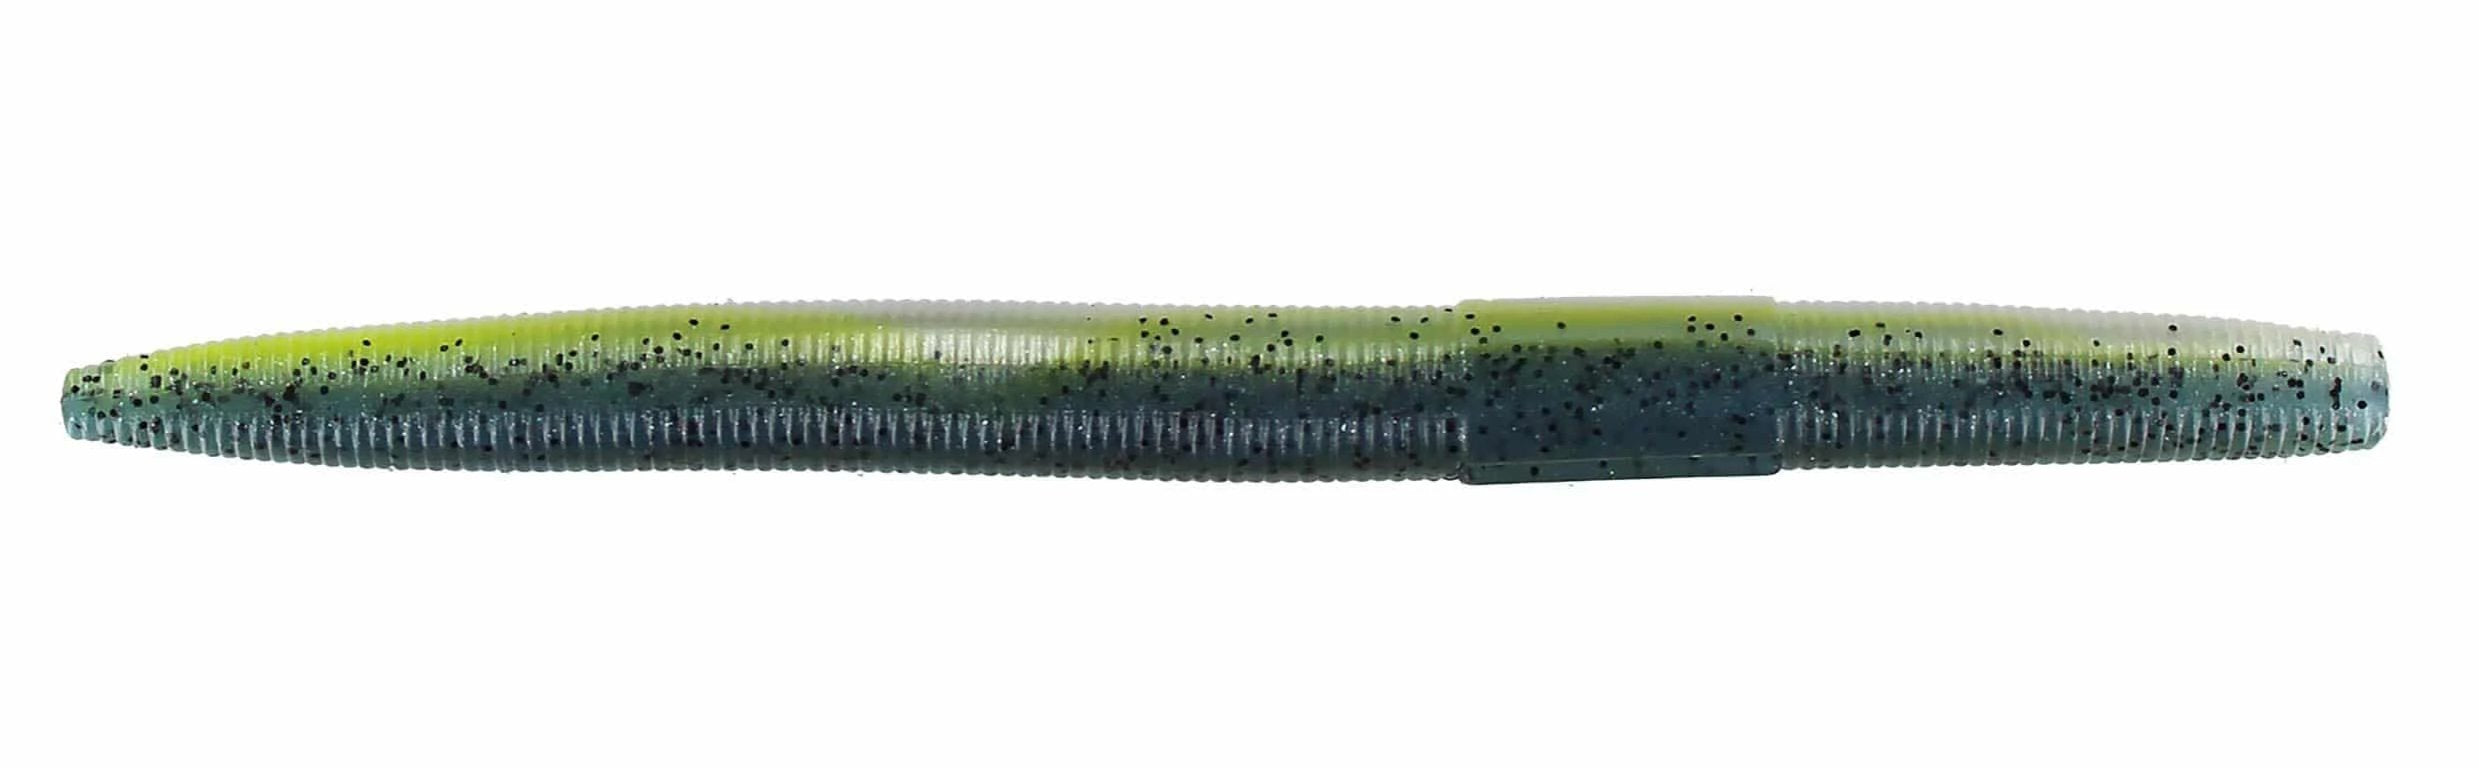 5” Electric Blue stick worm, soft plastic bait, senko style, bass fishing